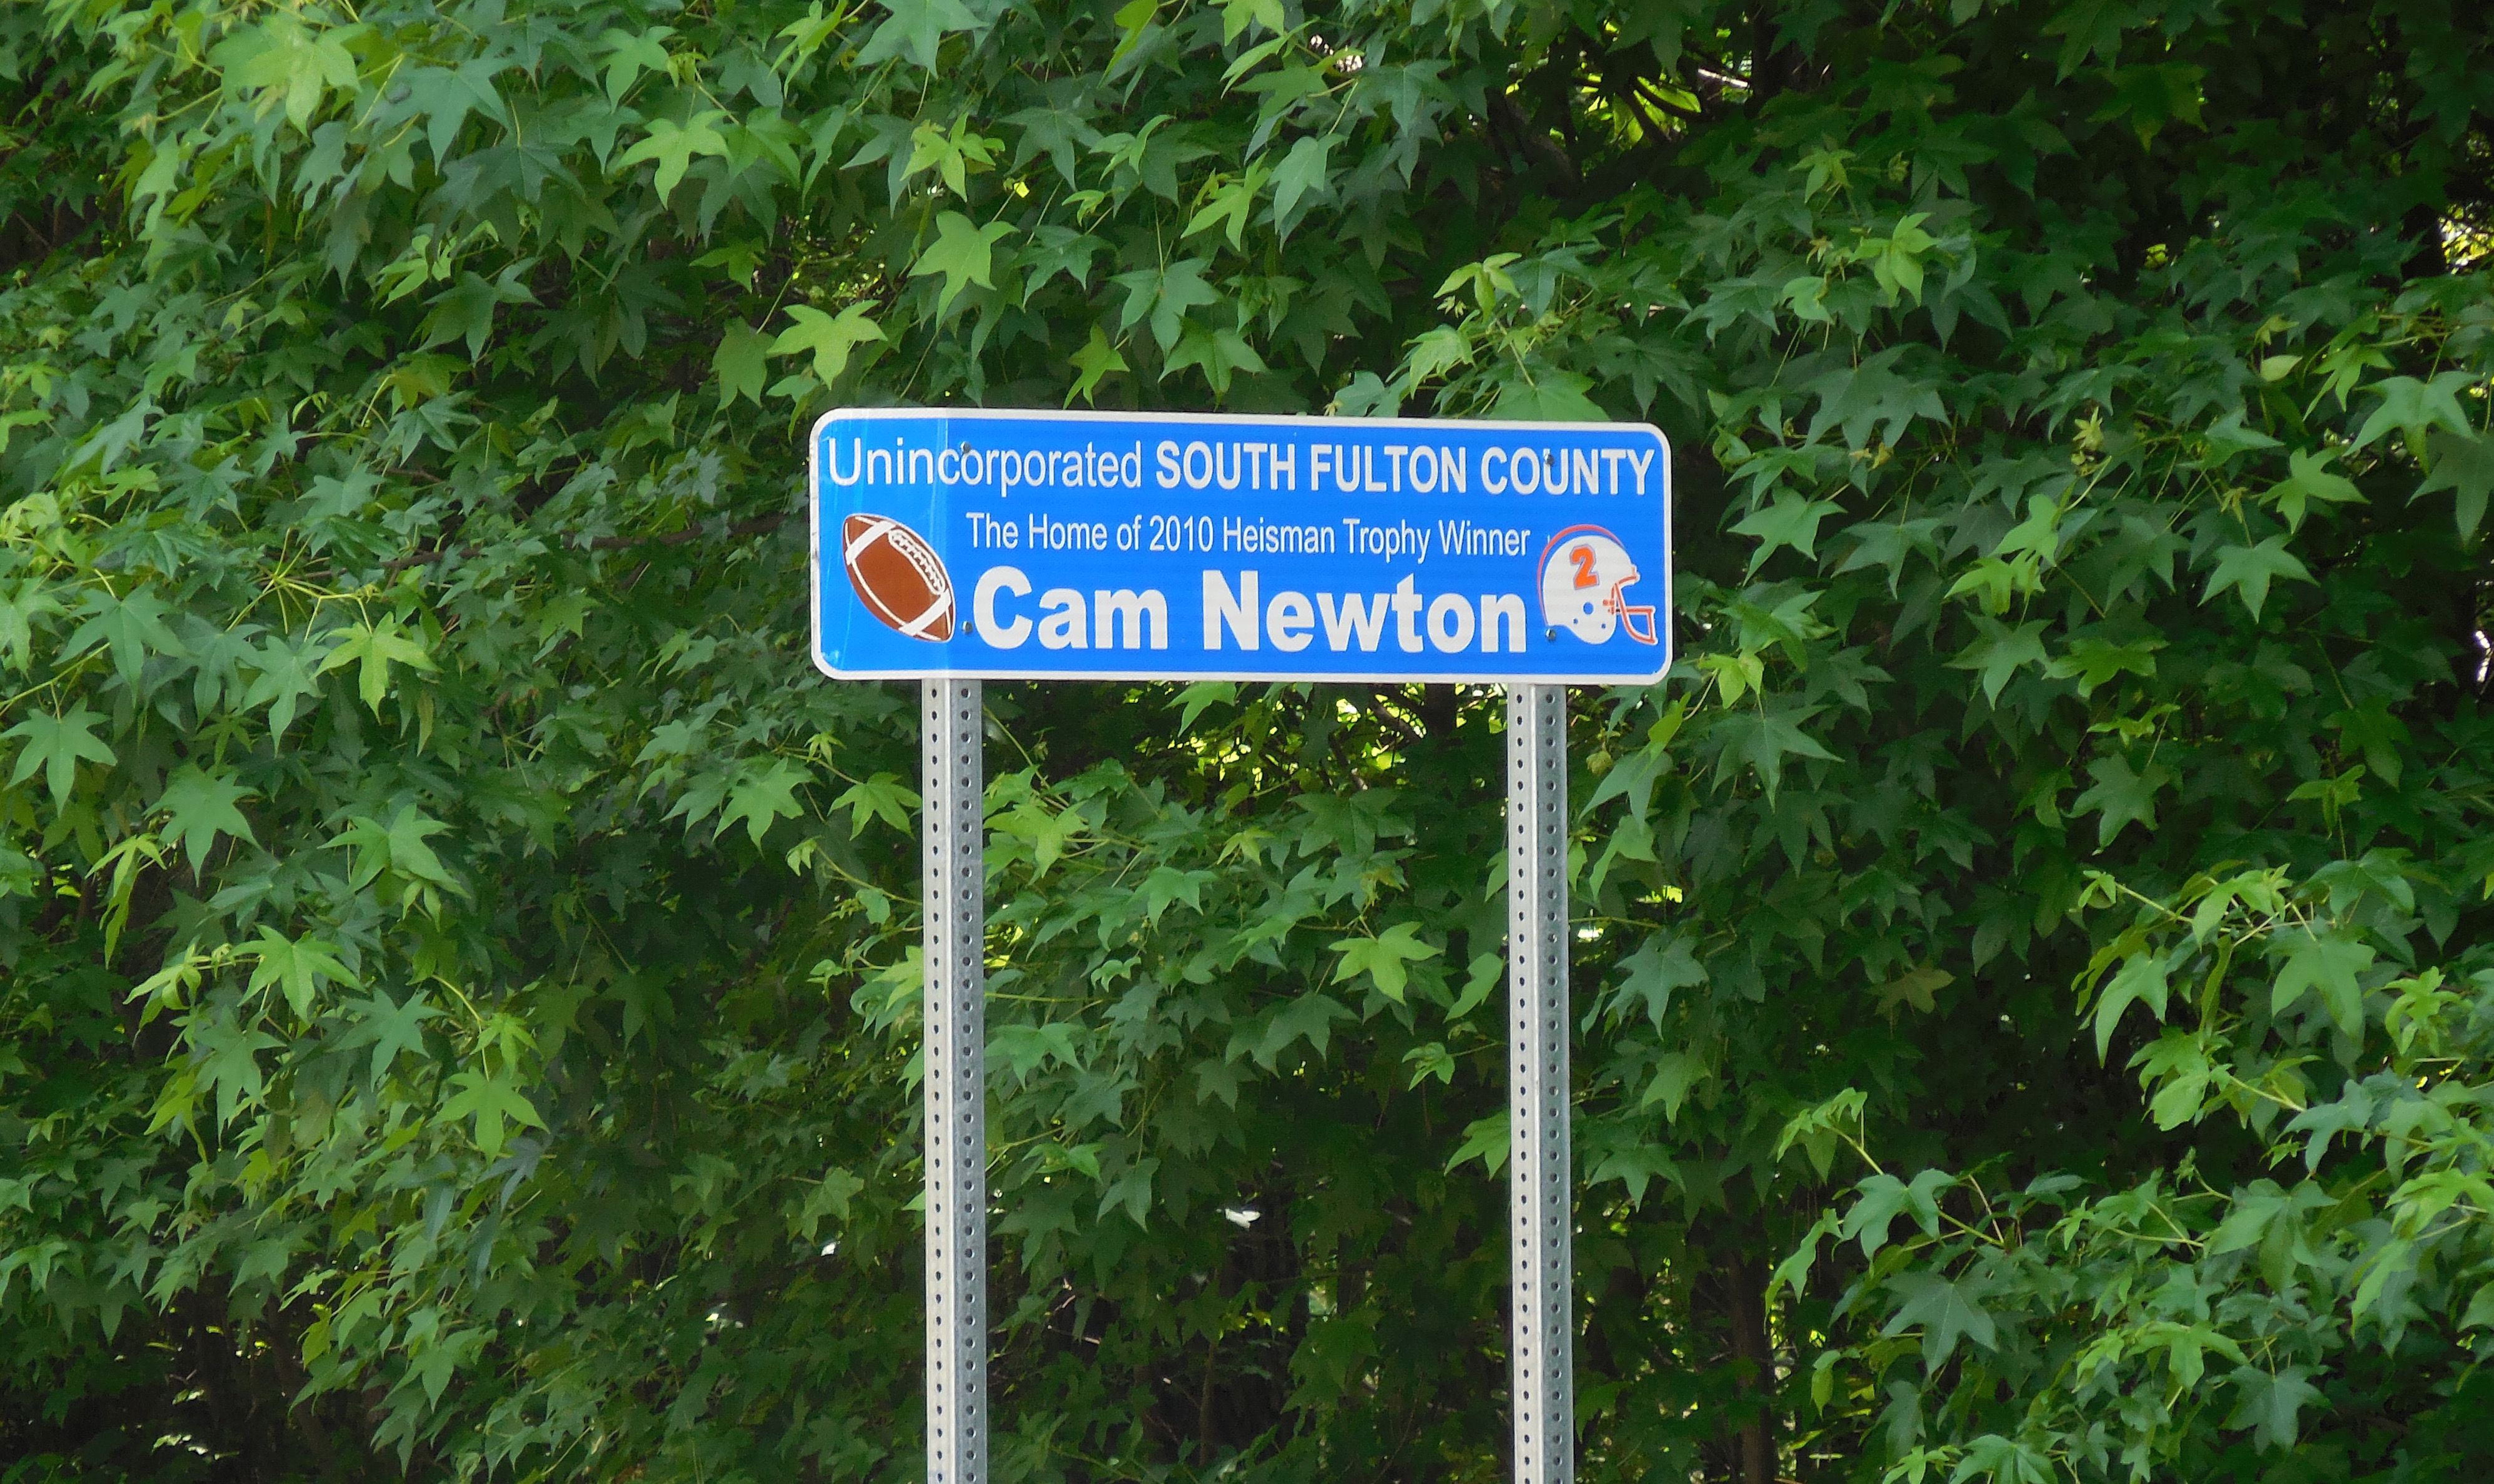 Atlanta almost had a Cam Newton Drive, but neighbors hated the idea